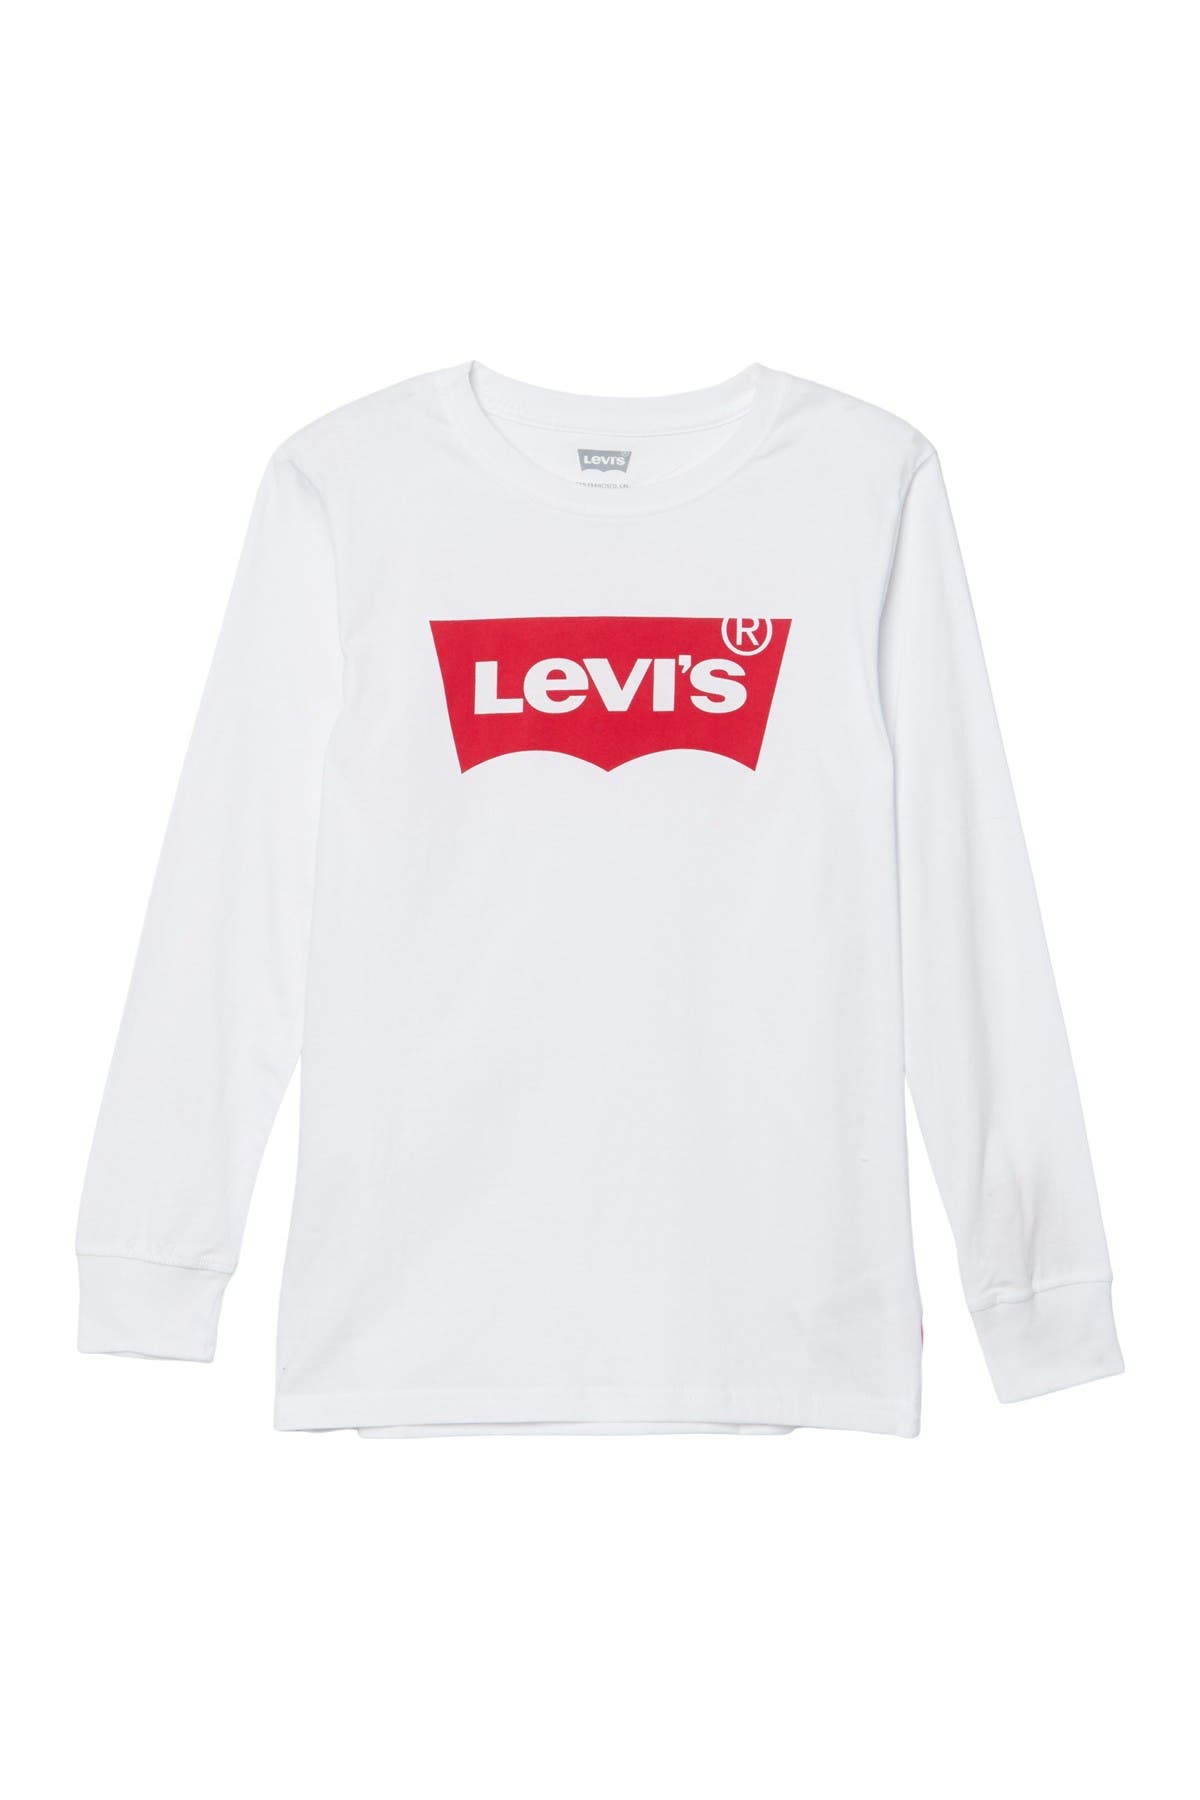 Levi's | Long Sleeve Batwing T-Shirt 